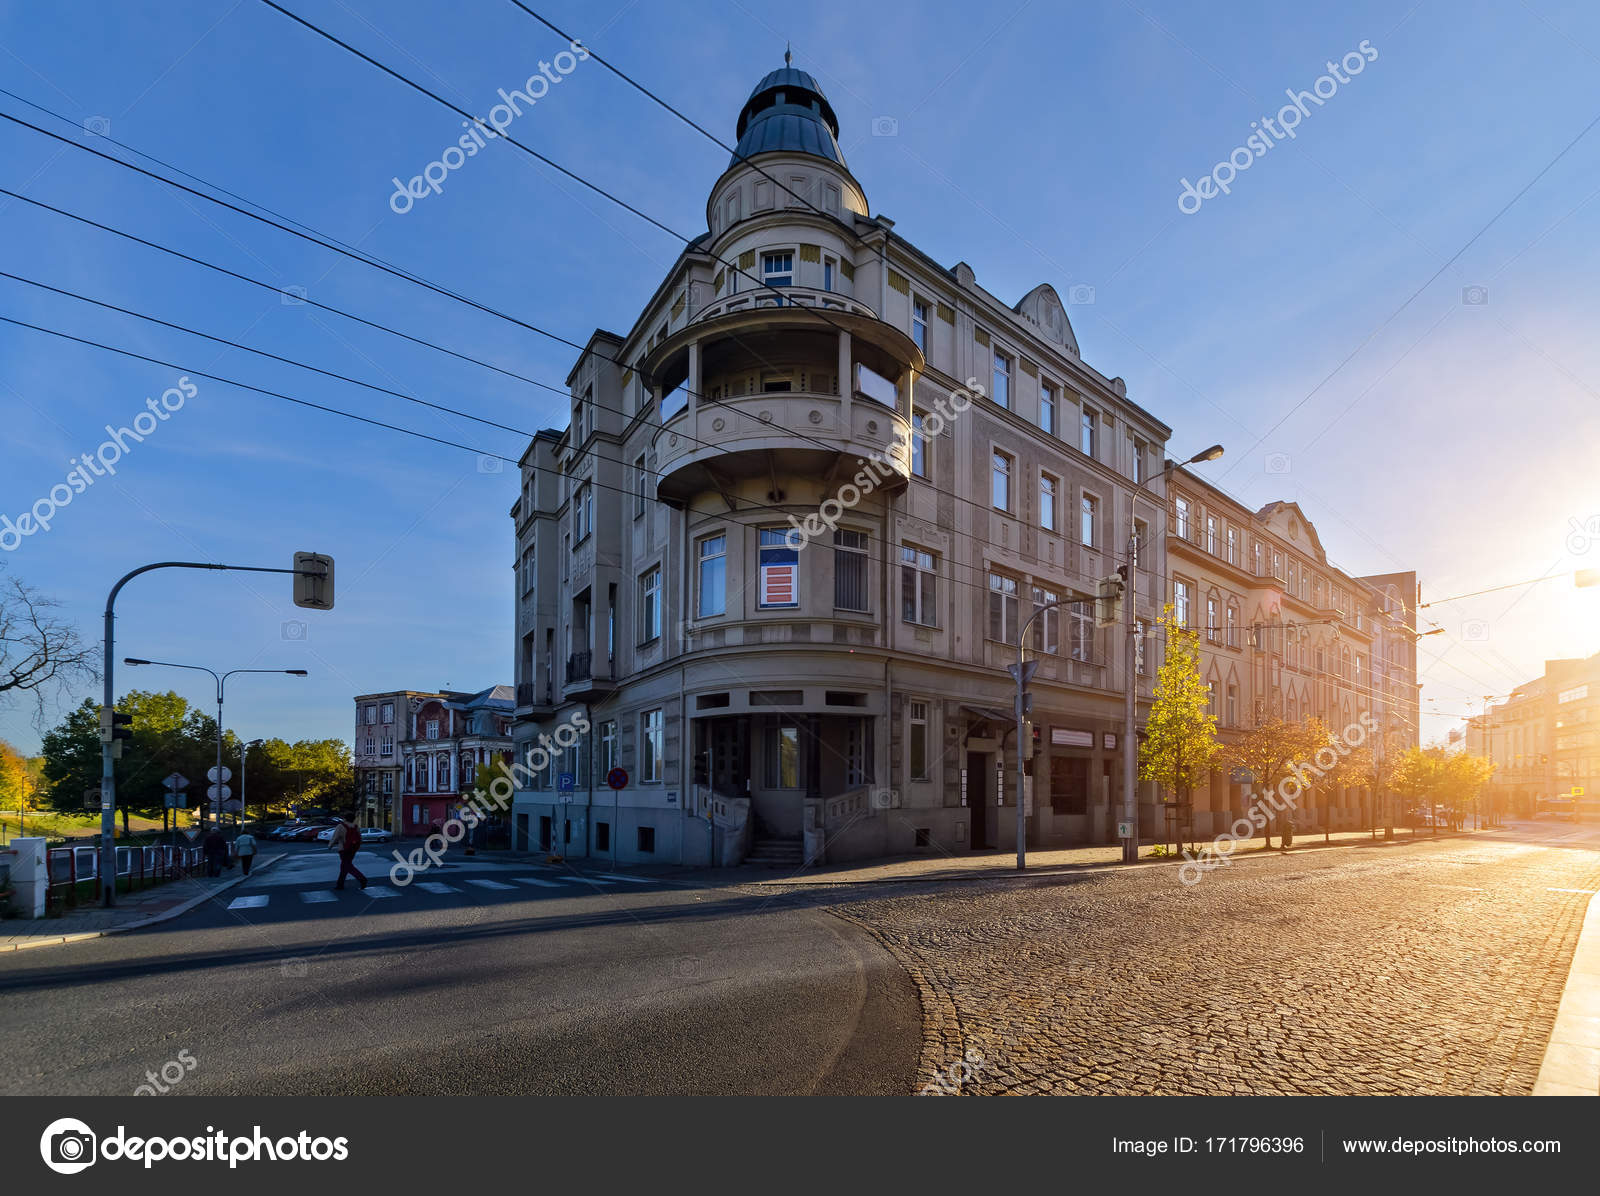 Architecture In Old Town Of Ostrava Stock Photo C Velishchuk1